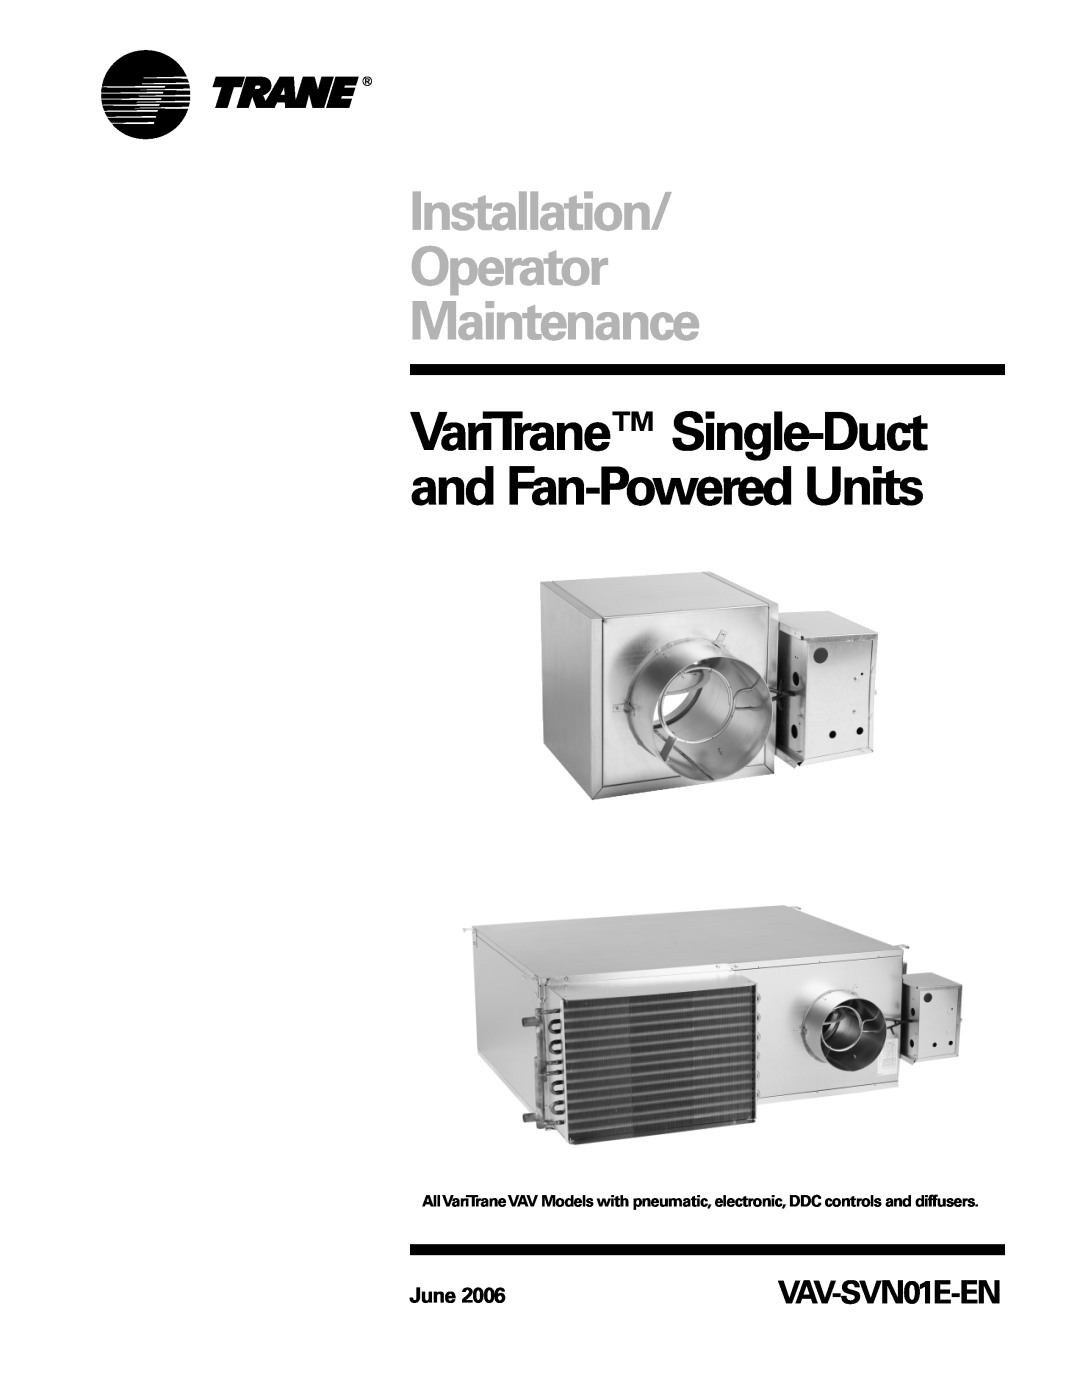 Trane manual VAV-SVN01E-EN, June, Installation Operator Maintenance, VariTrane Single-Ductand Fan-PoweredUnits 